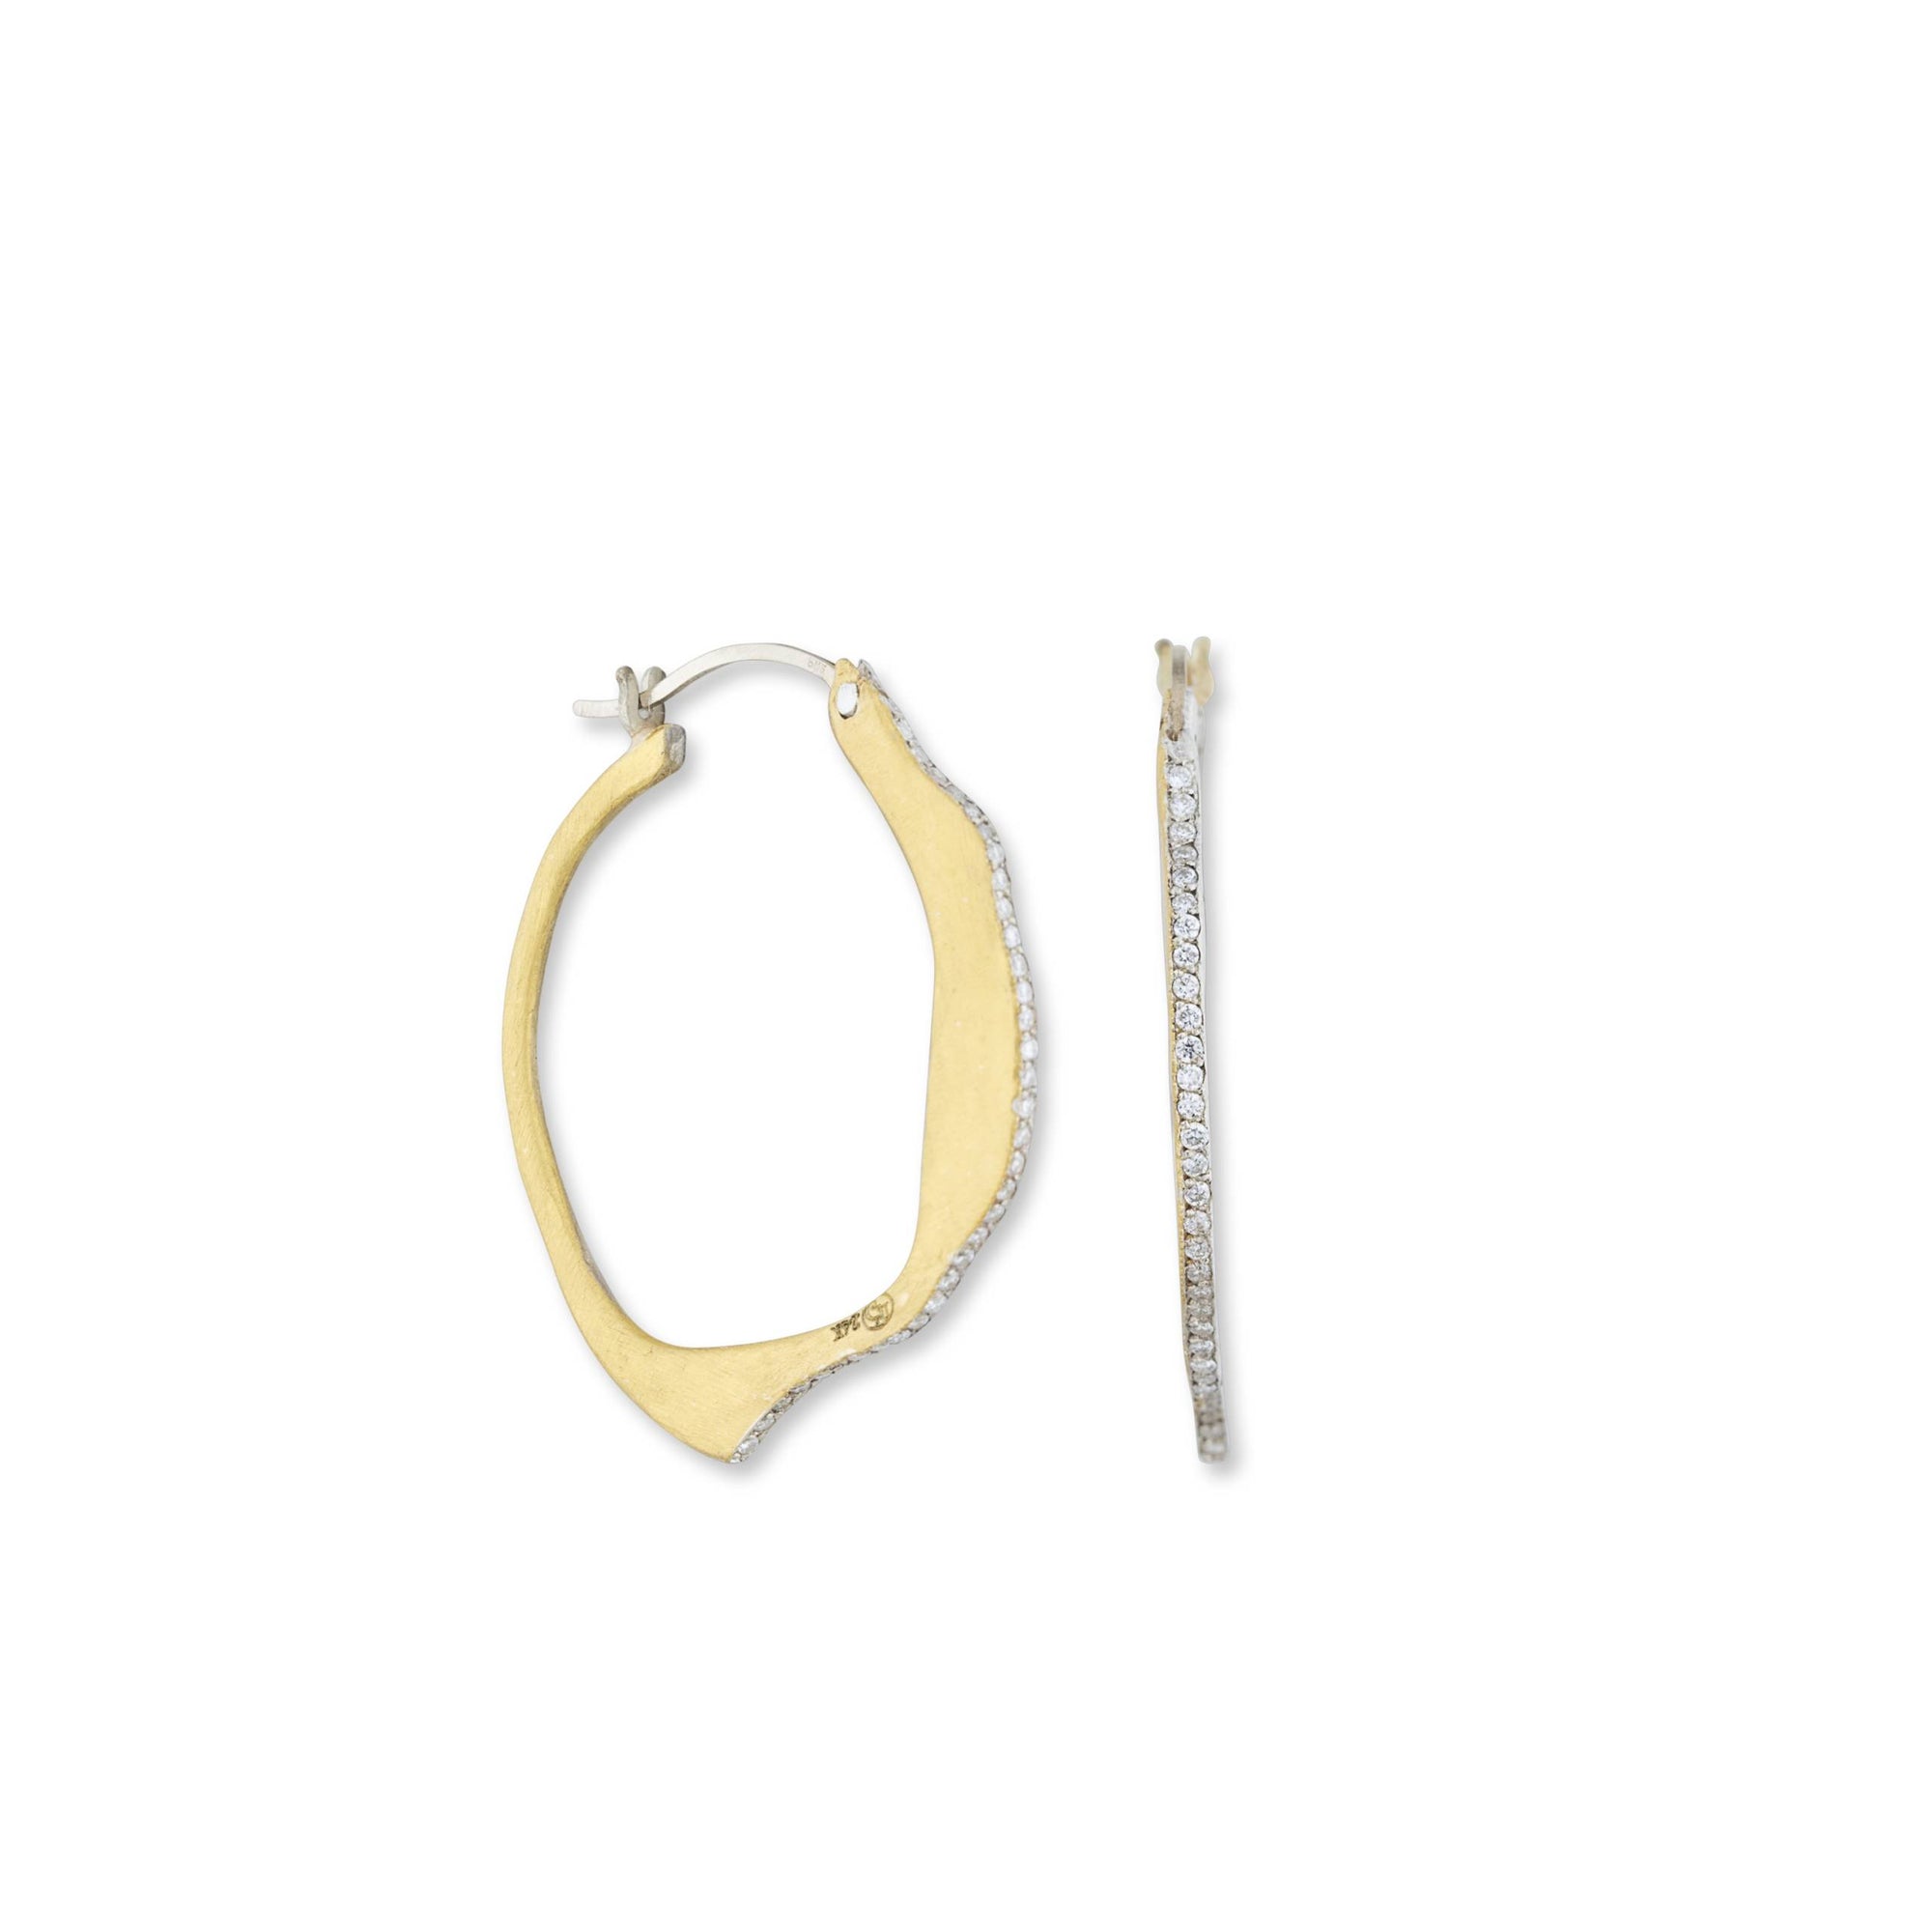 Lika Beher 24K Gold & Sterling Silver “Kiki” Pave Diamonds Earrings